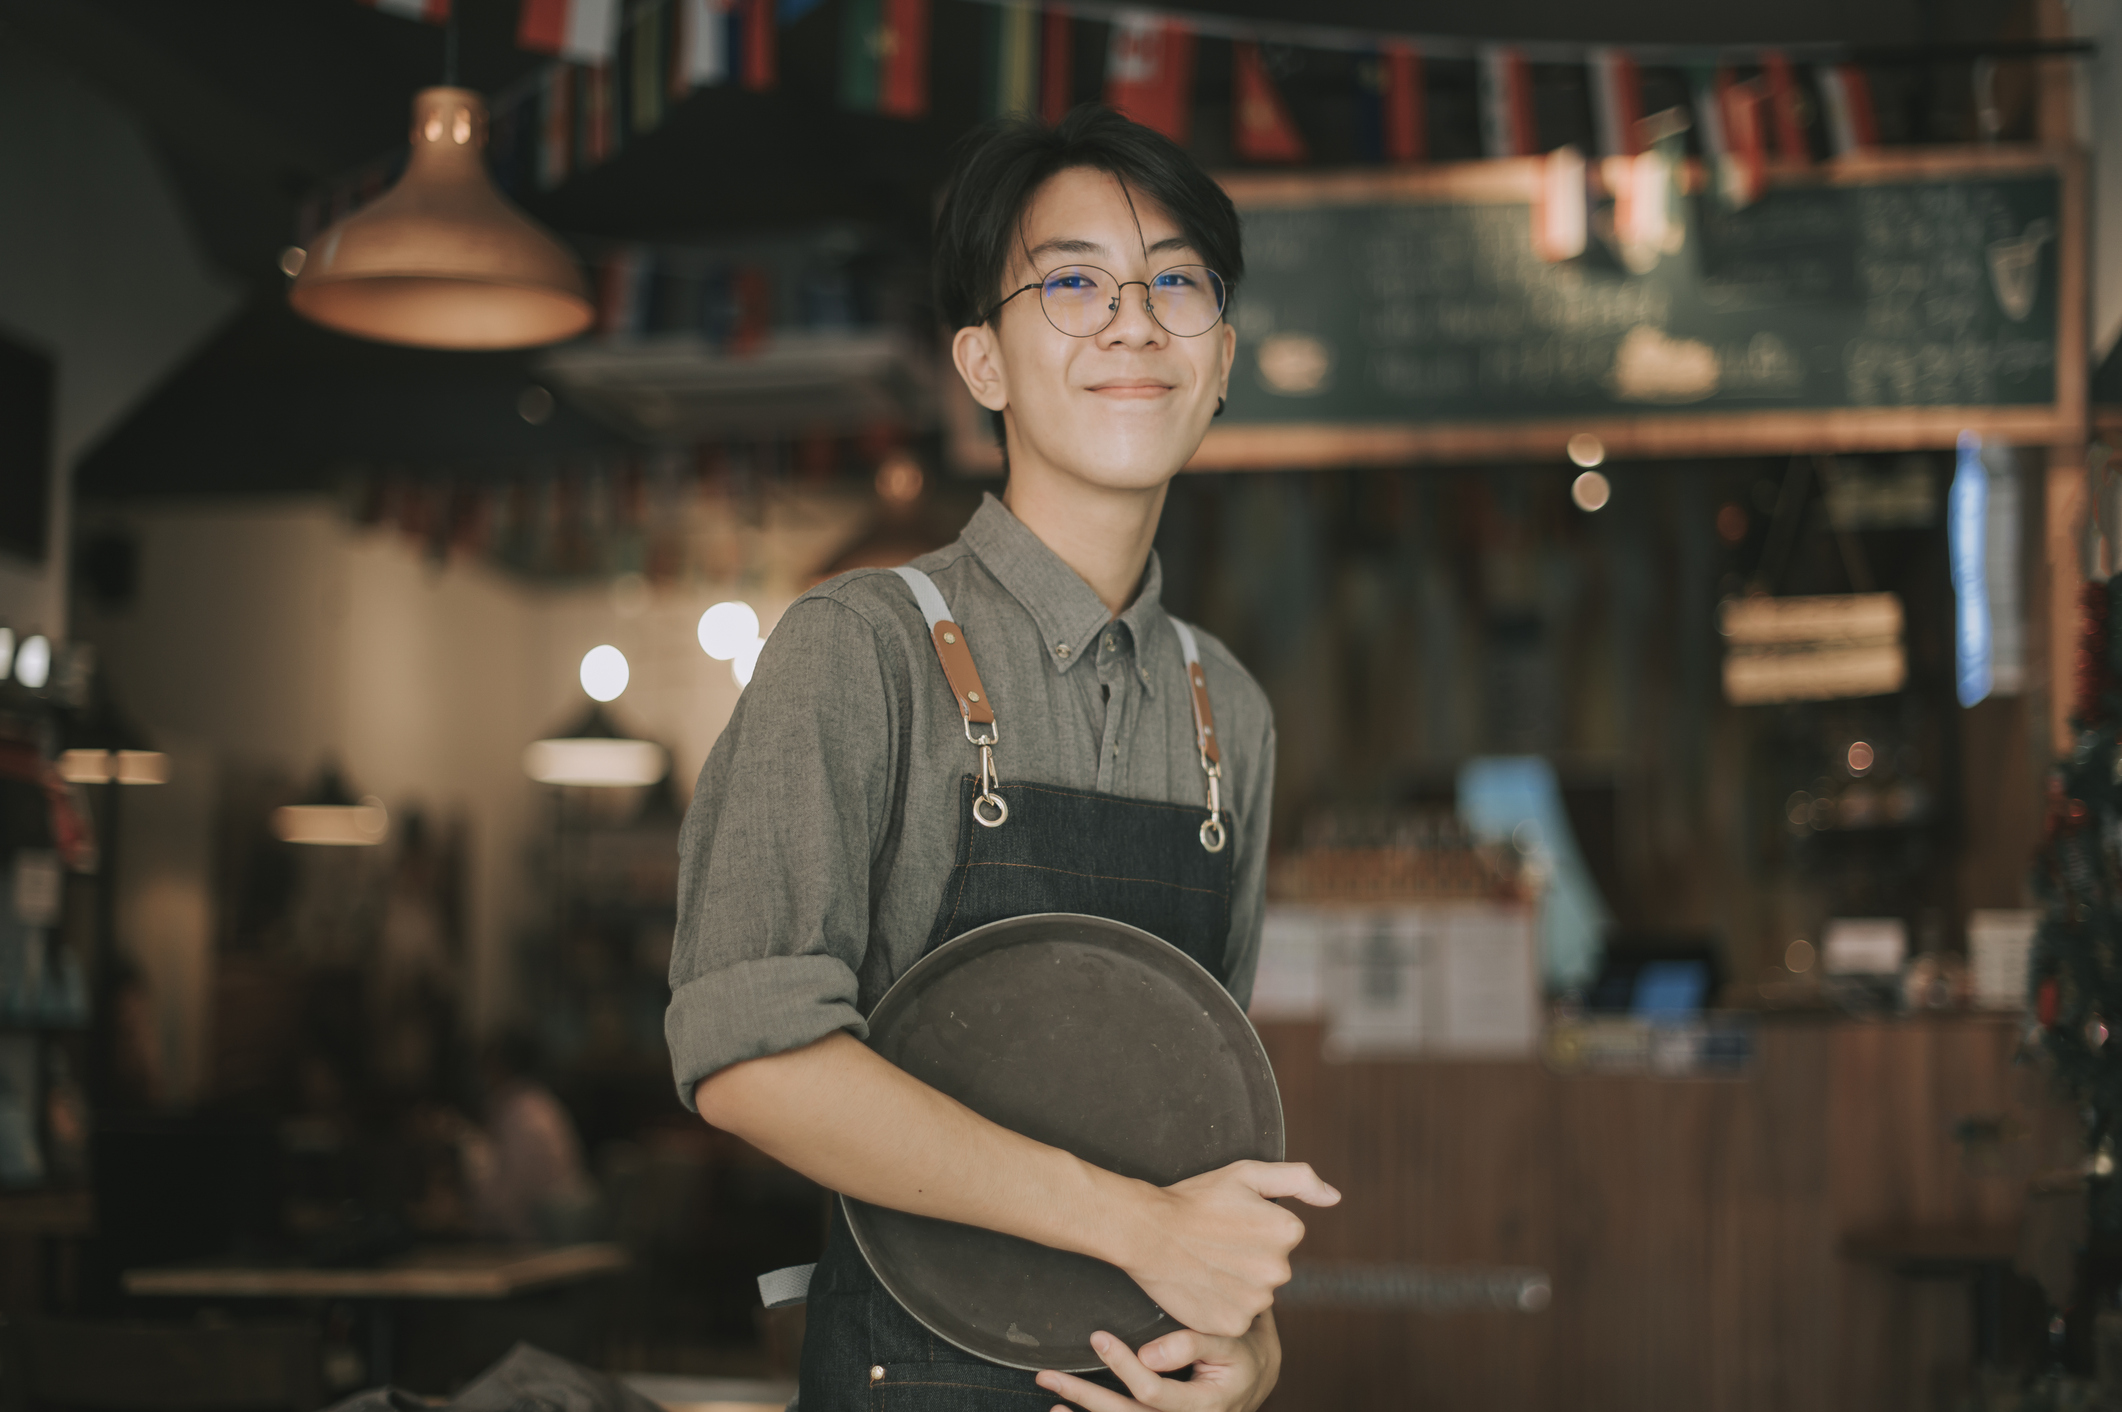 Teenage waiter at work smiling at camera